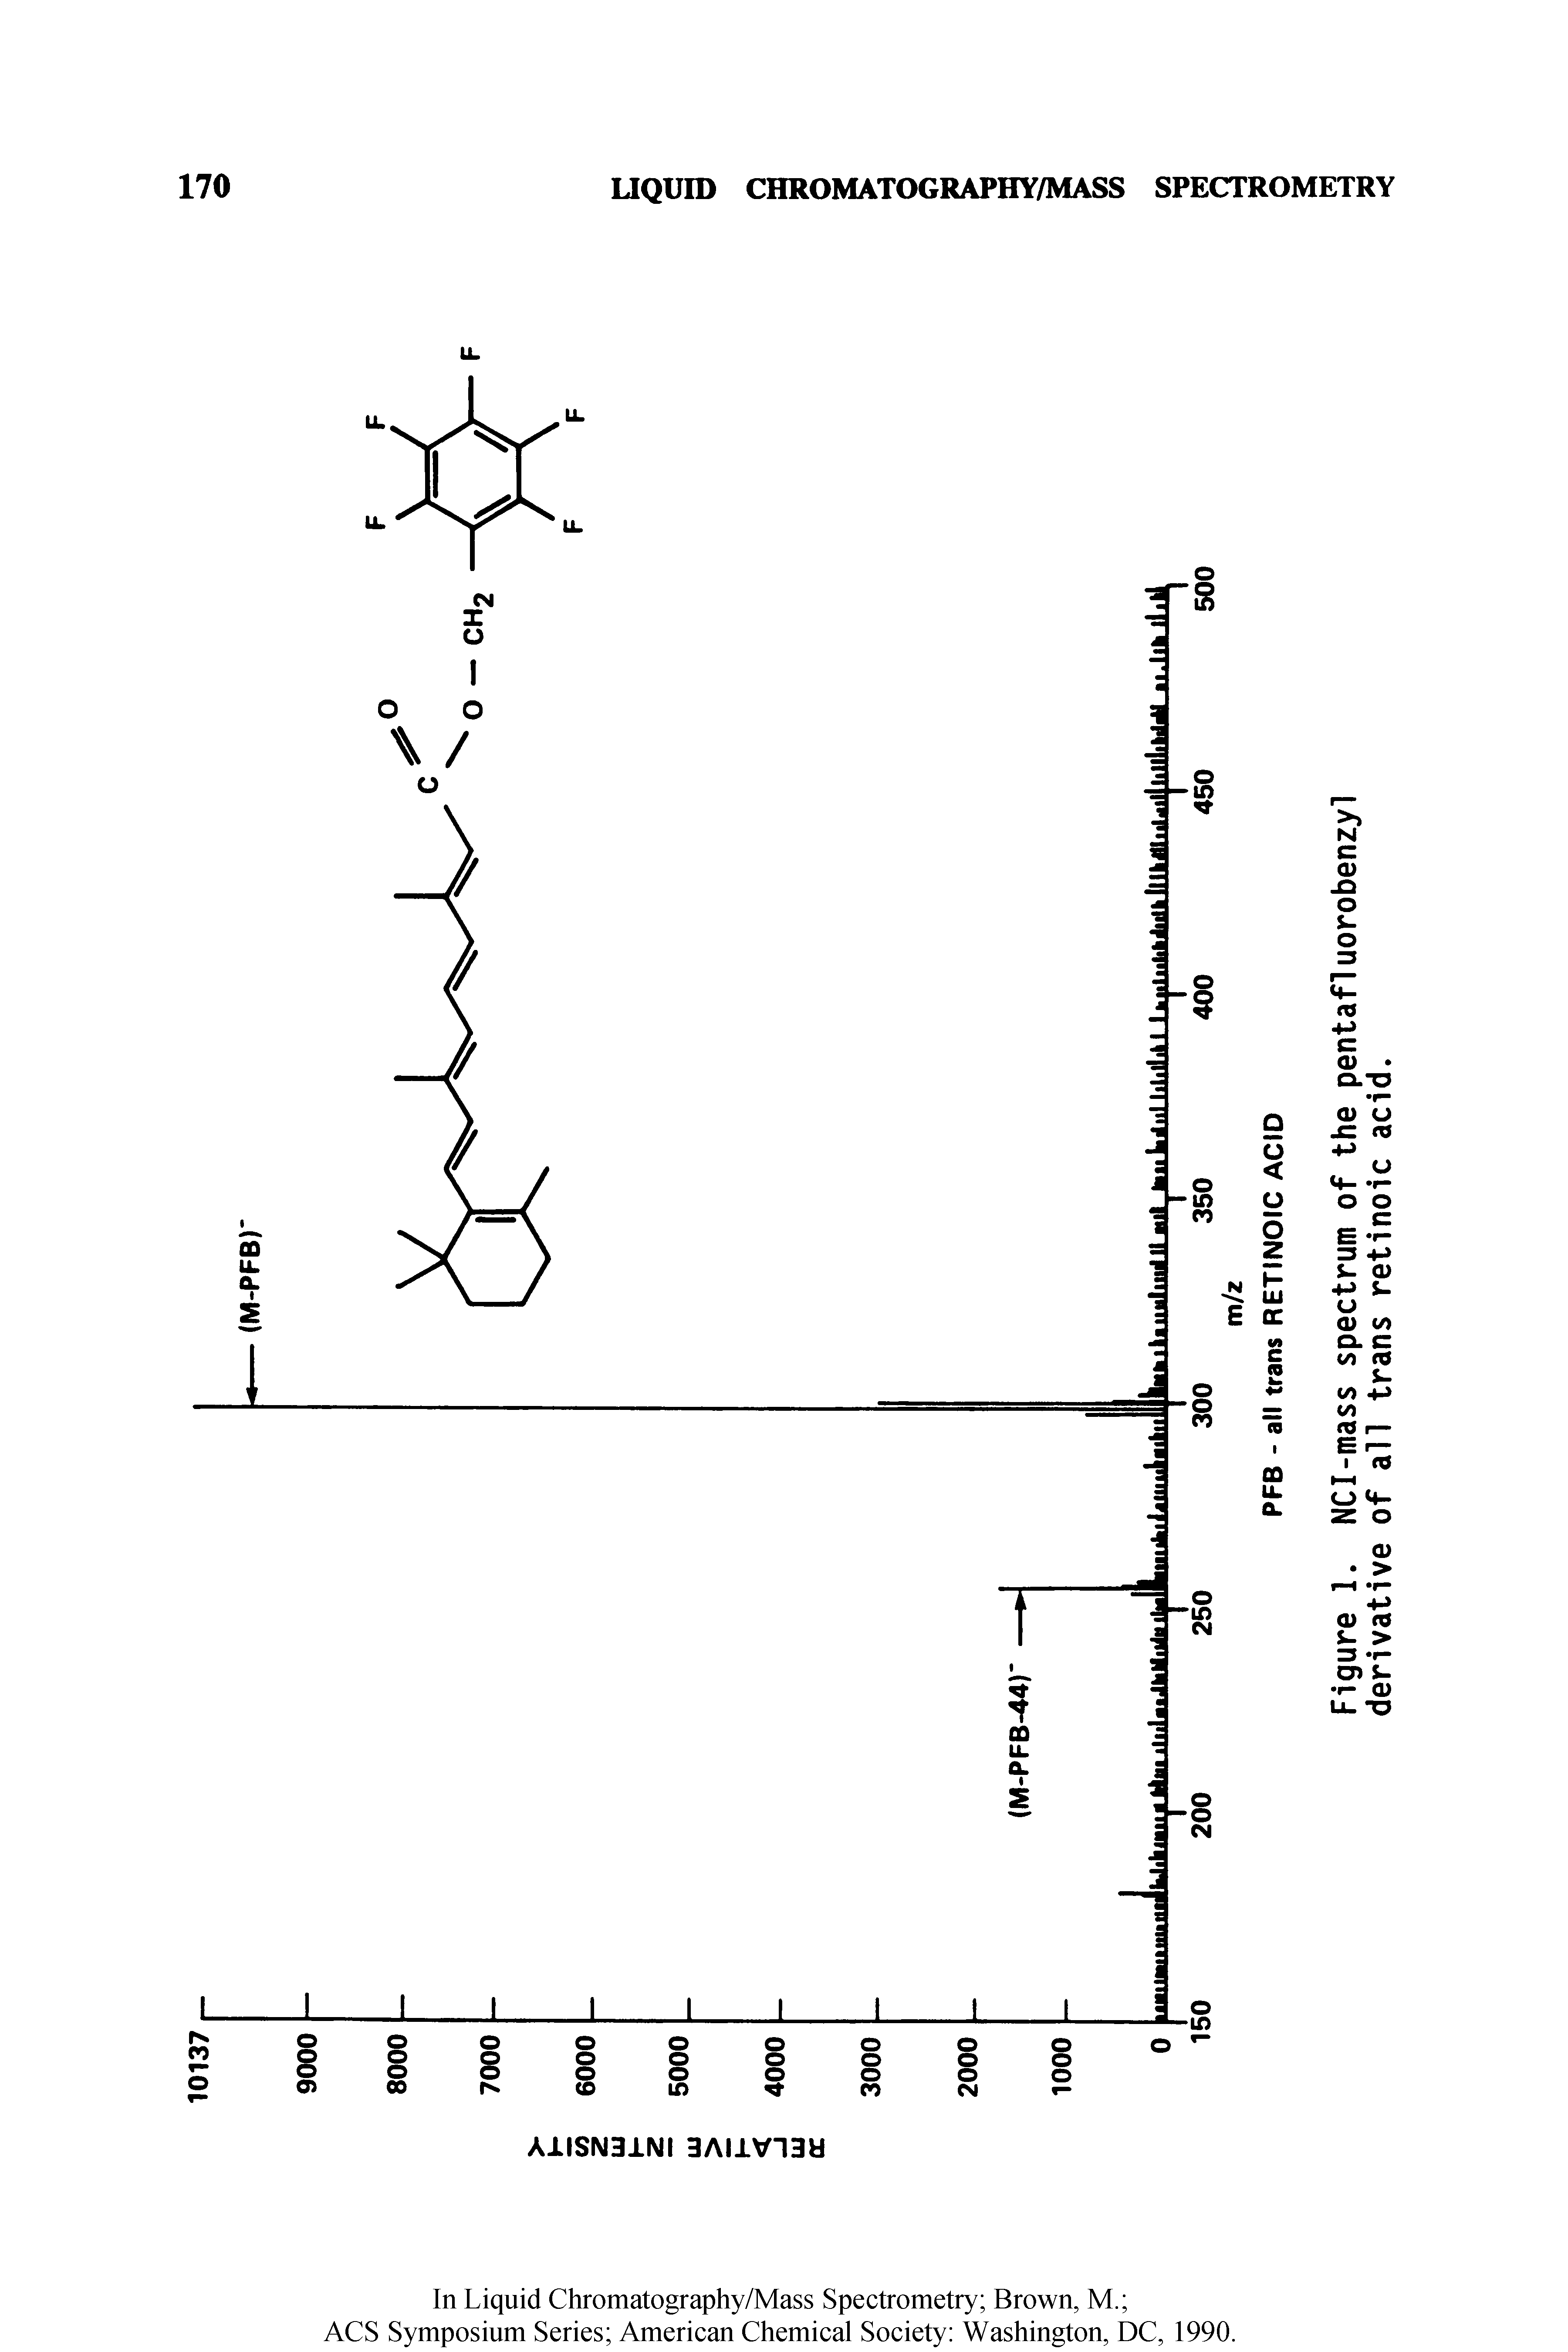 Figure 1. NCI-mass spectrum of the pentafluorobenzyl derivative of all trans retinoic acid.